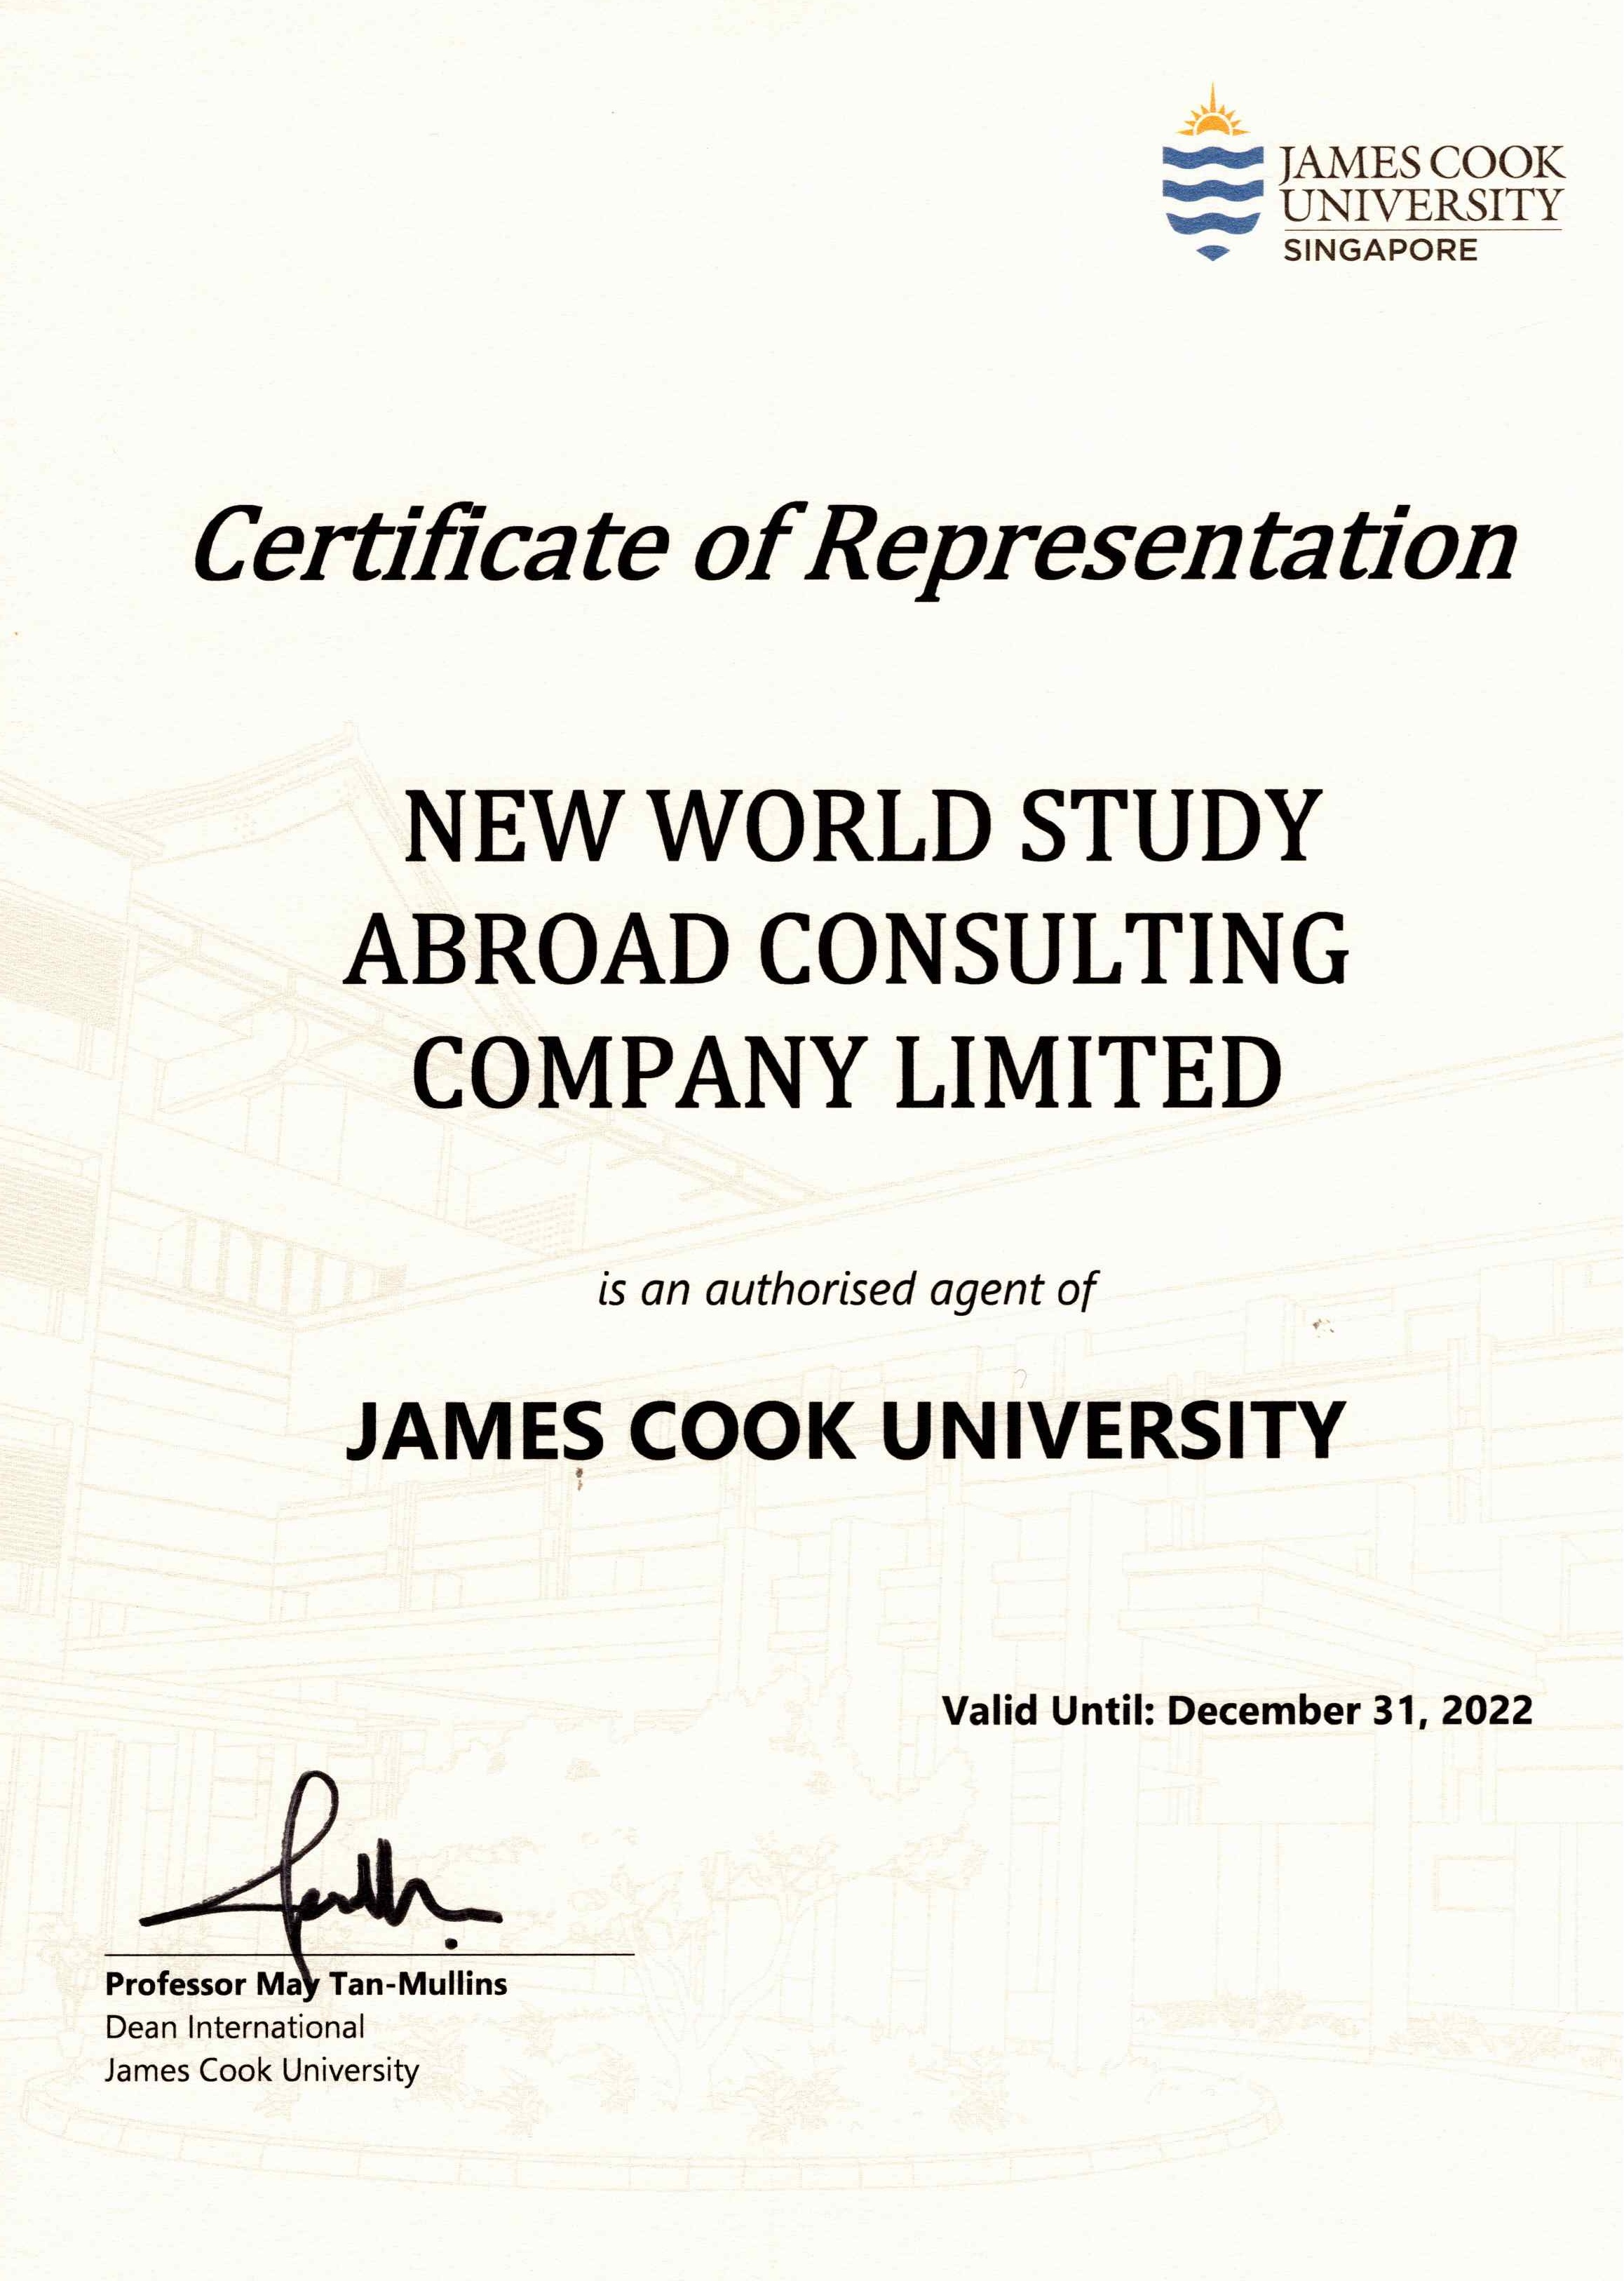 James Cook University Singapore (JCUS)